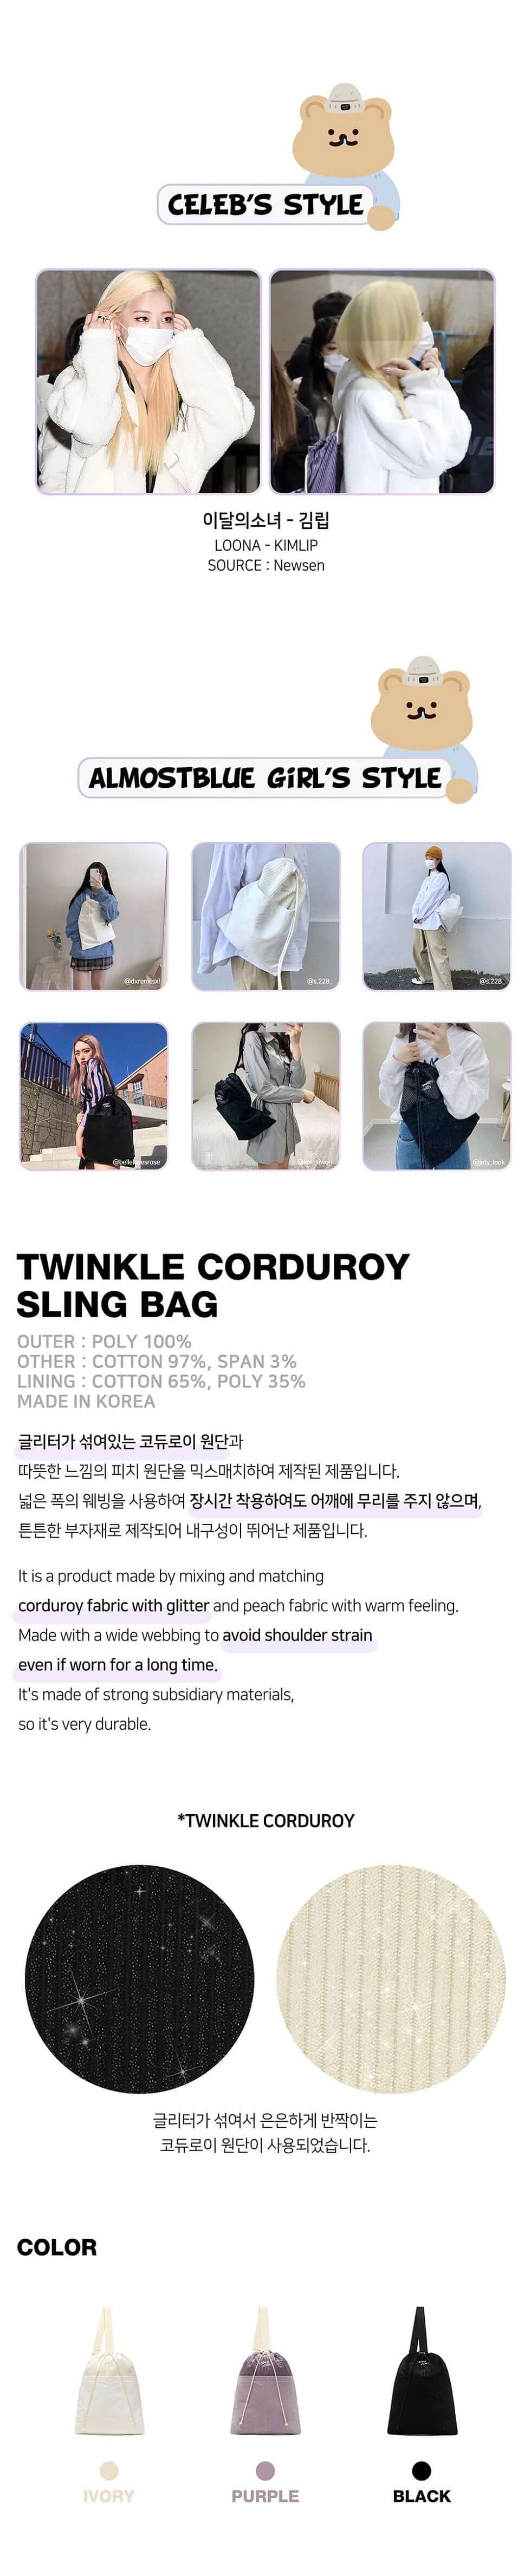 Casiblue Twinkle Cana Sling Bag Sling